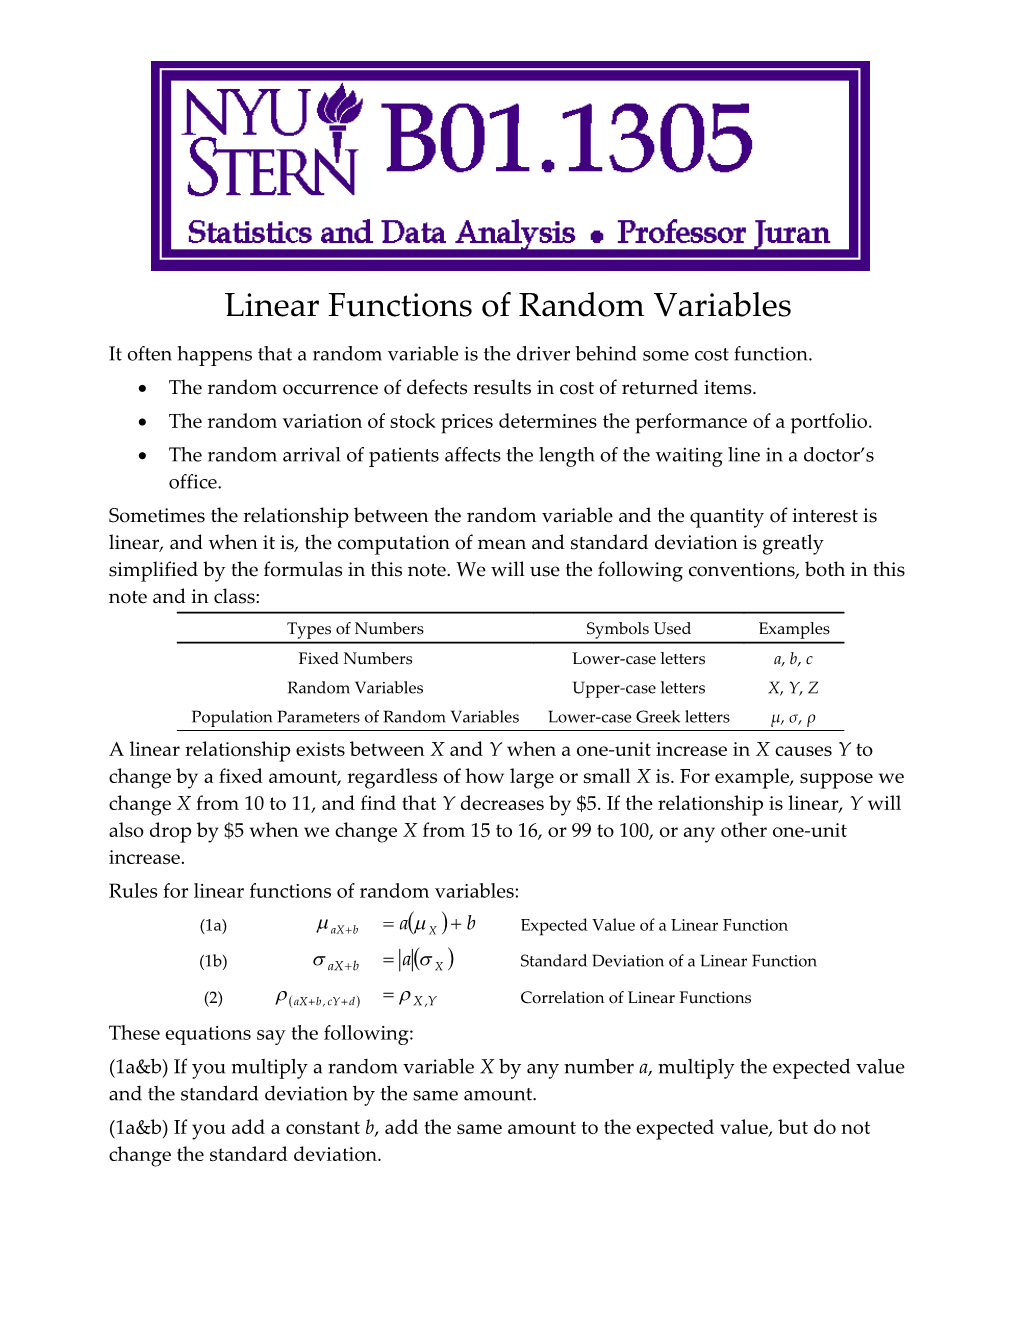 Linear Functions of Random Variables